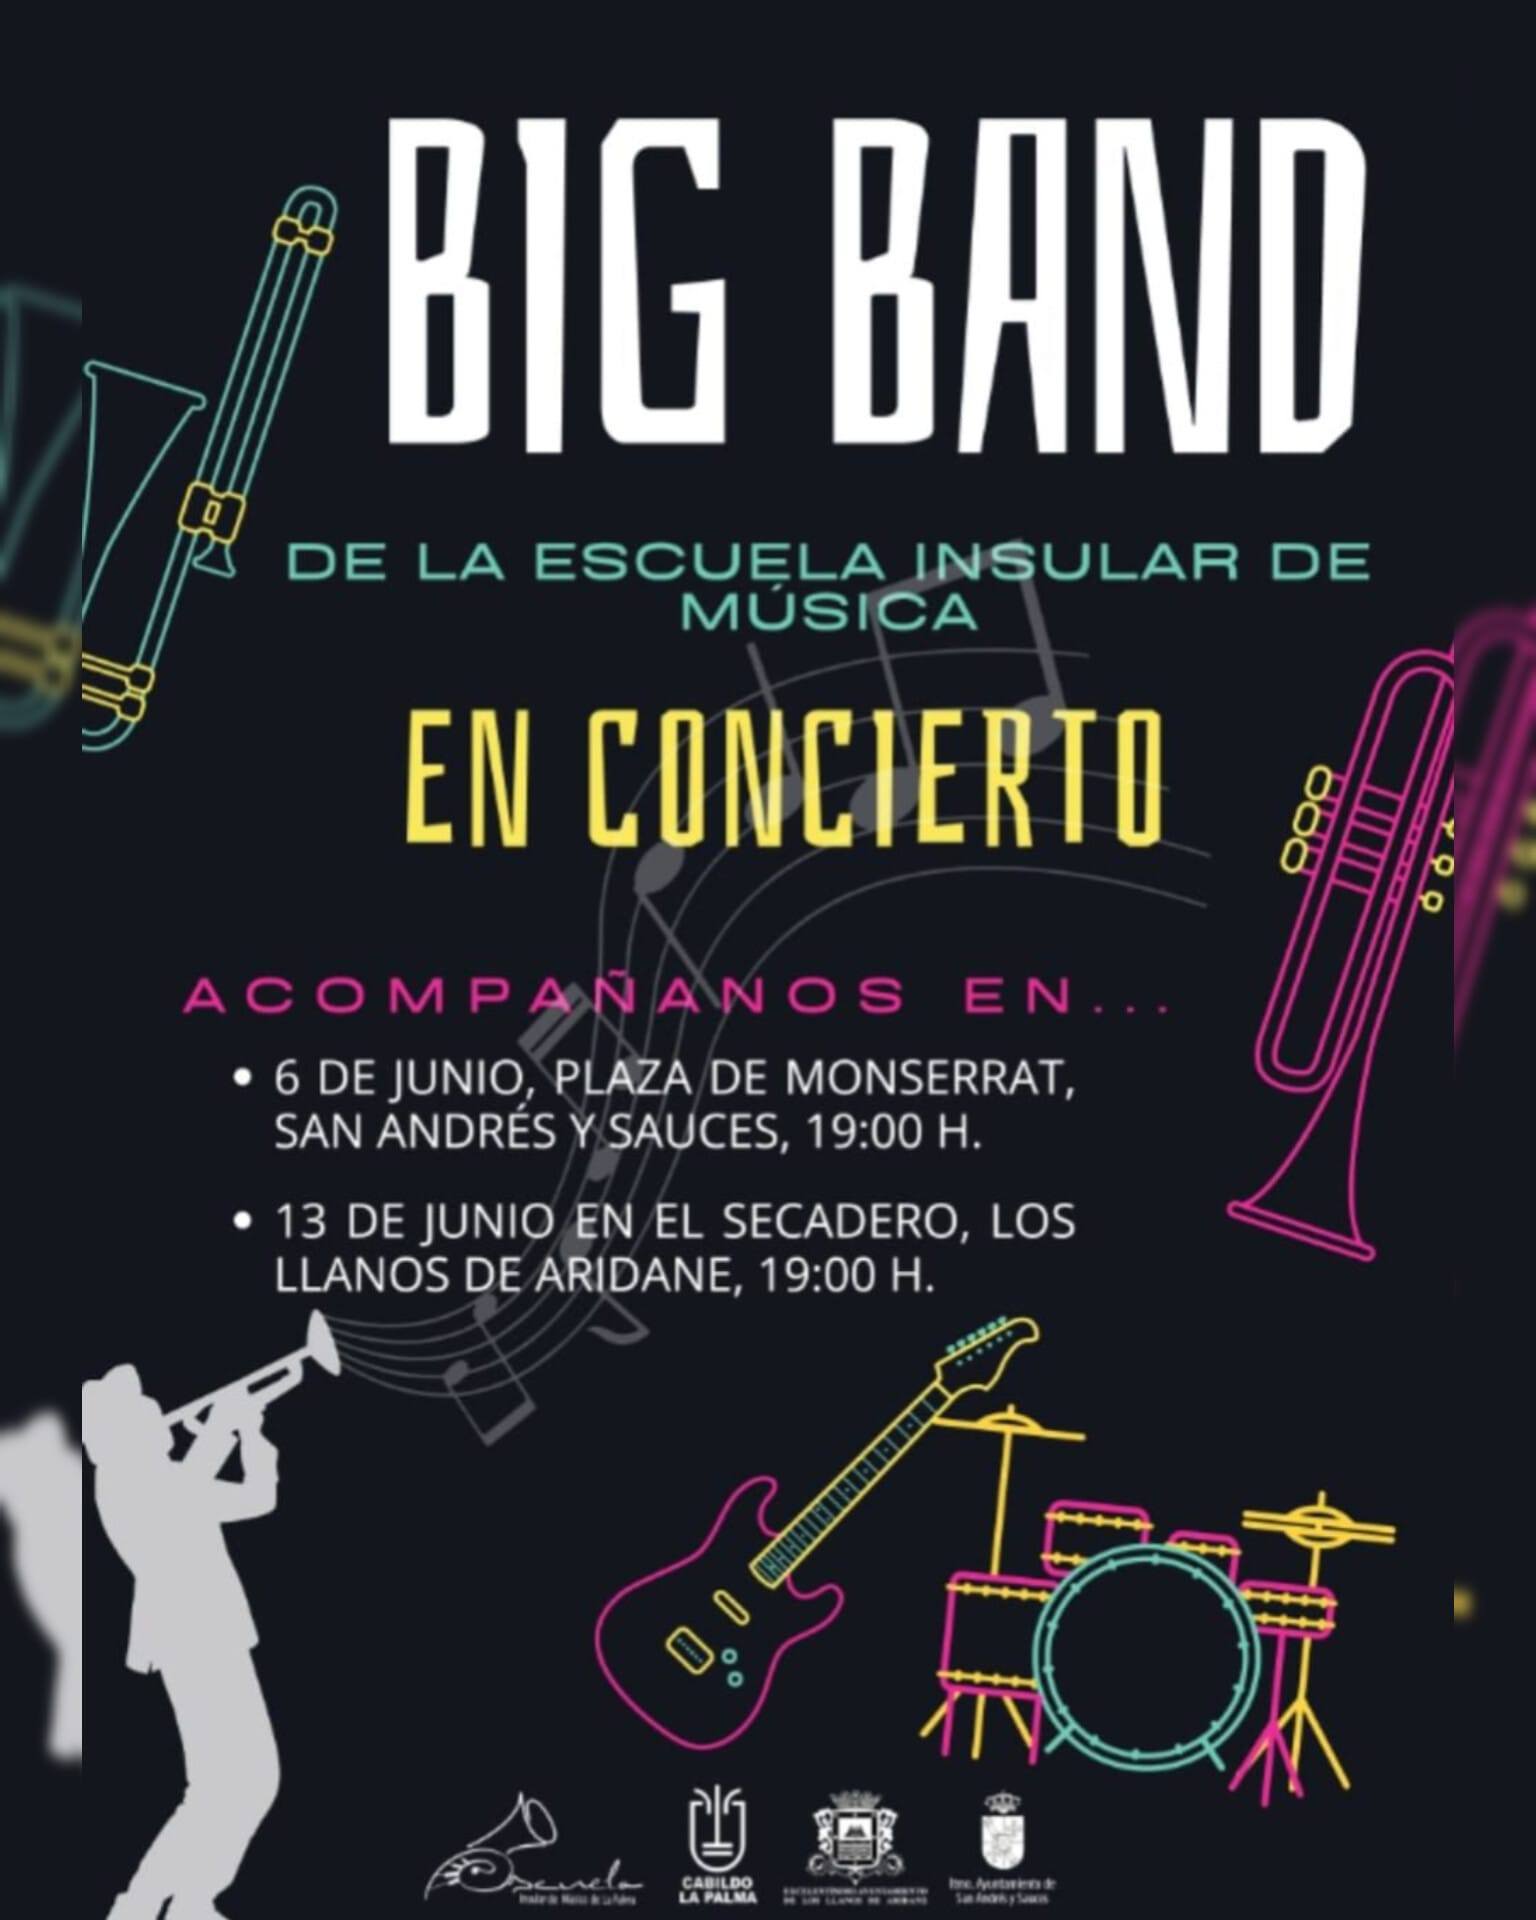 Big Band de la Escuela Insular de Música de La Palma en San Andrés y Sauces